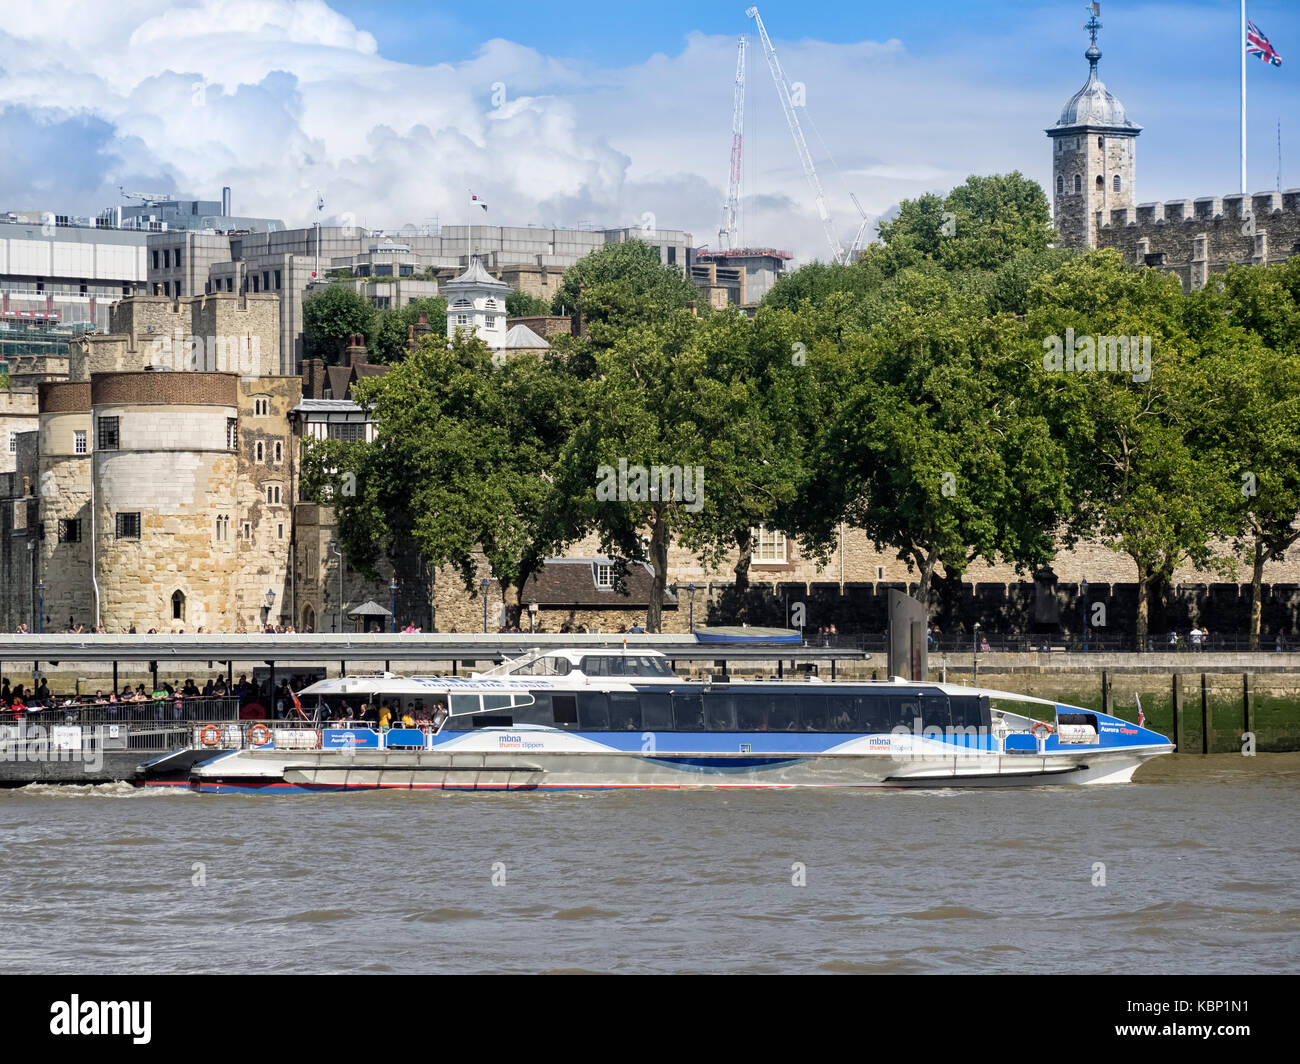 LONDON, Großbritannien - 25. AUGUST 2017: Thames Clipper River Bus am Tower Pier am Tower of London Stockfoto